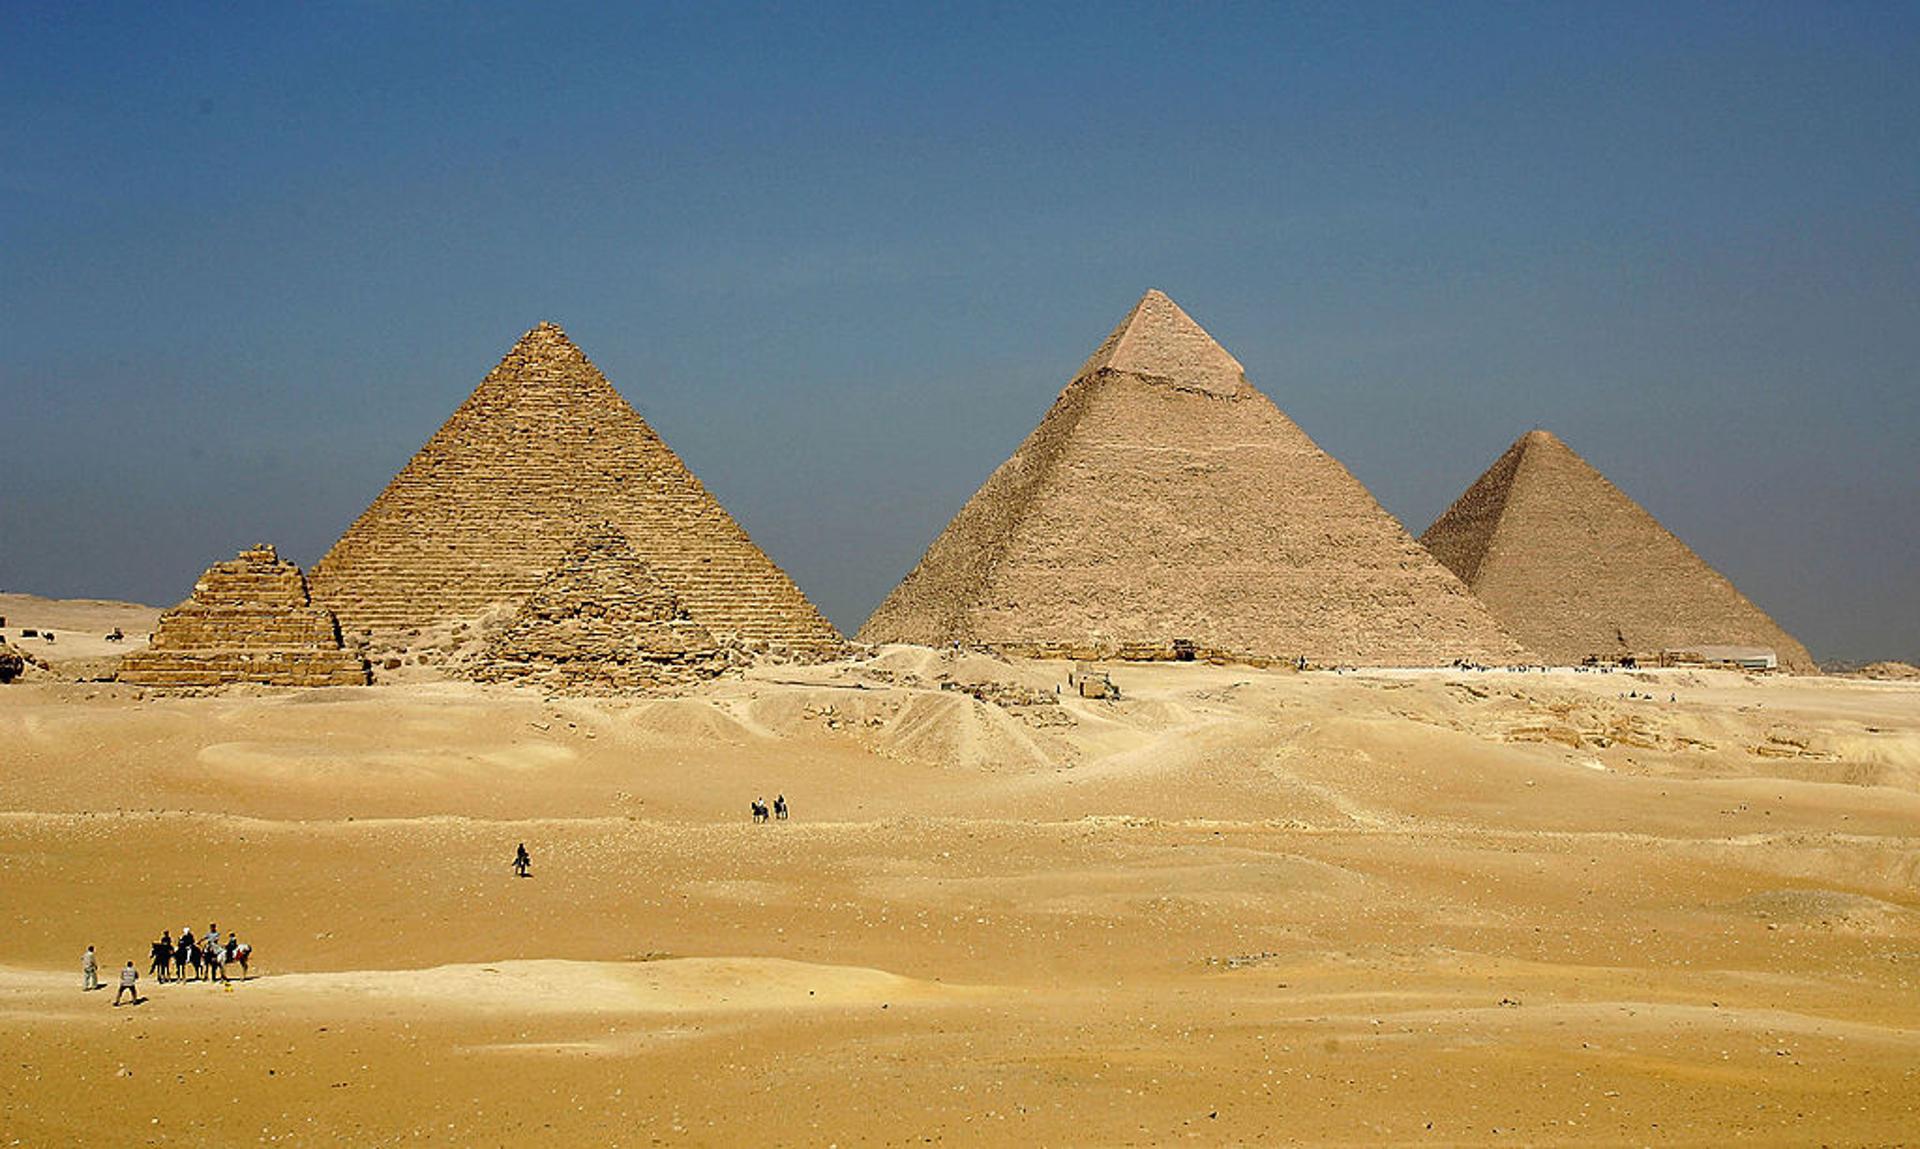 Alt: Three pyramids of Giza in Egypt